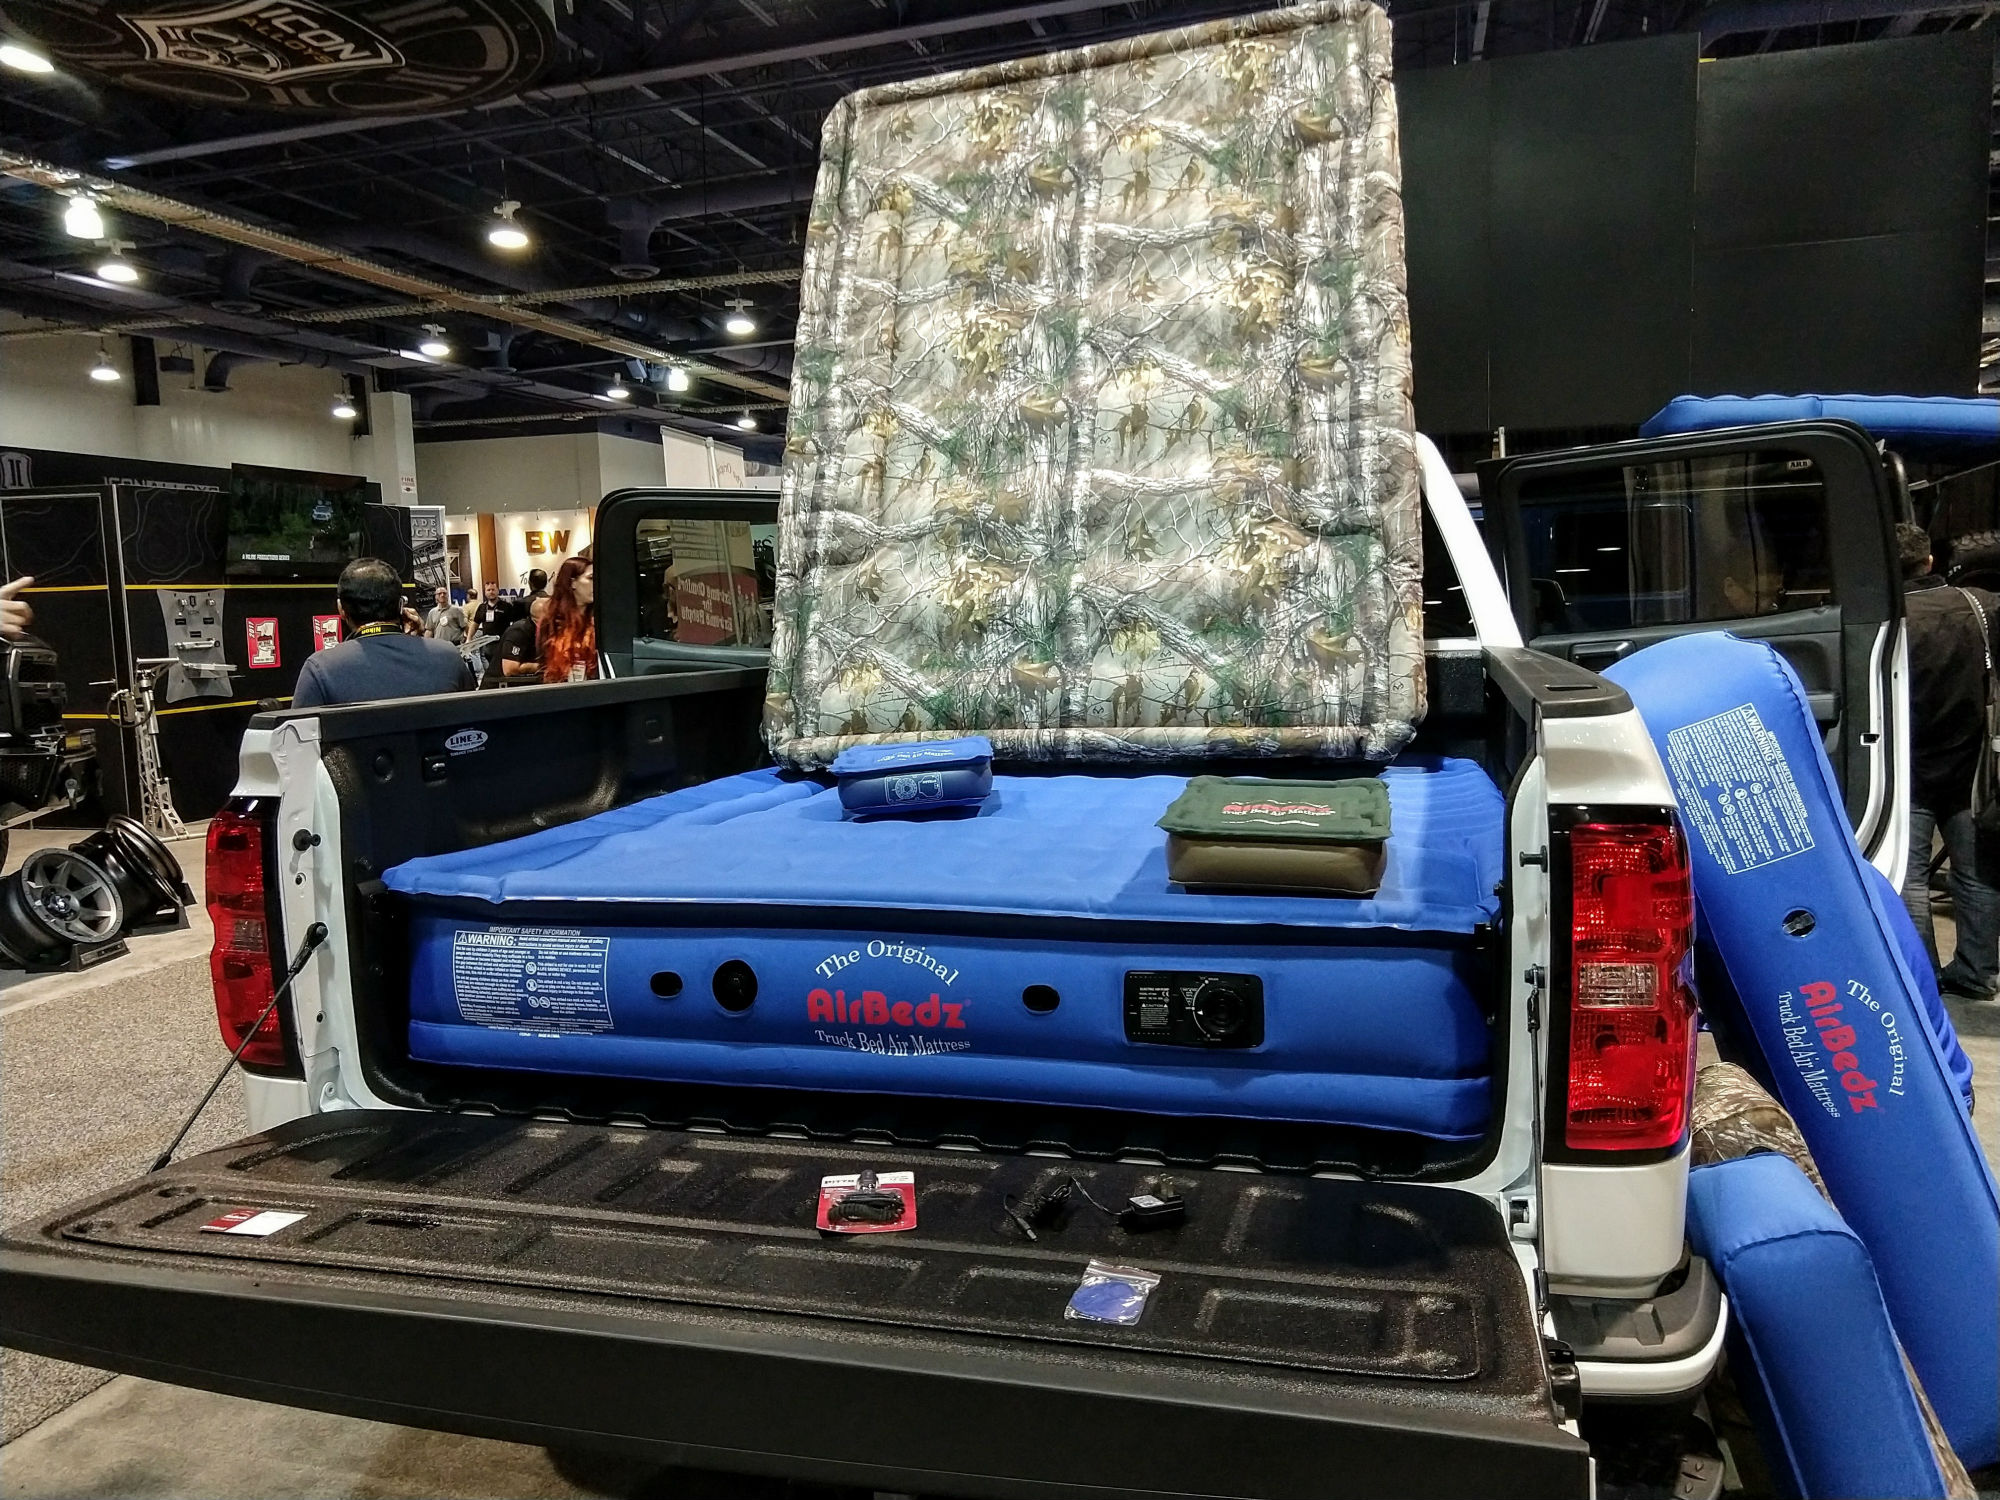 Airbedz Truck Bed Inflatable Mattress seen at SEMA 2017 